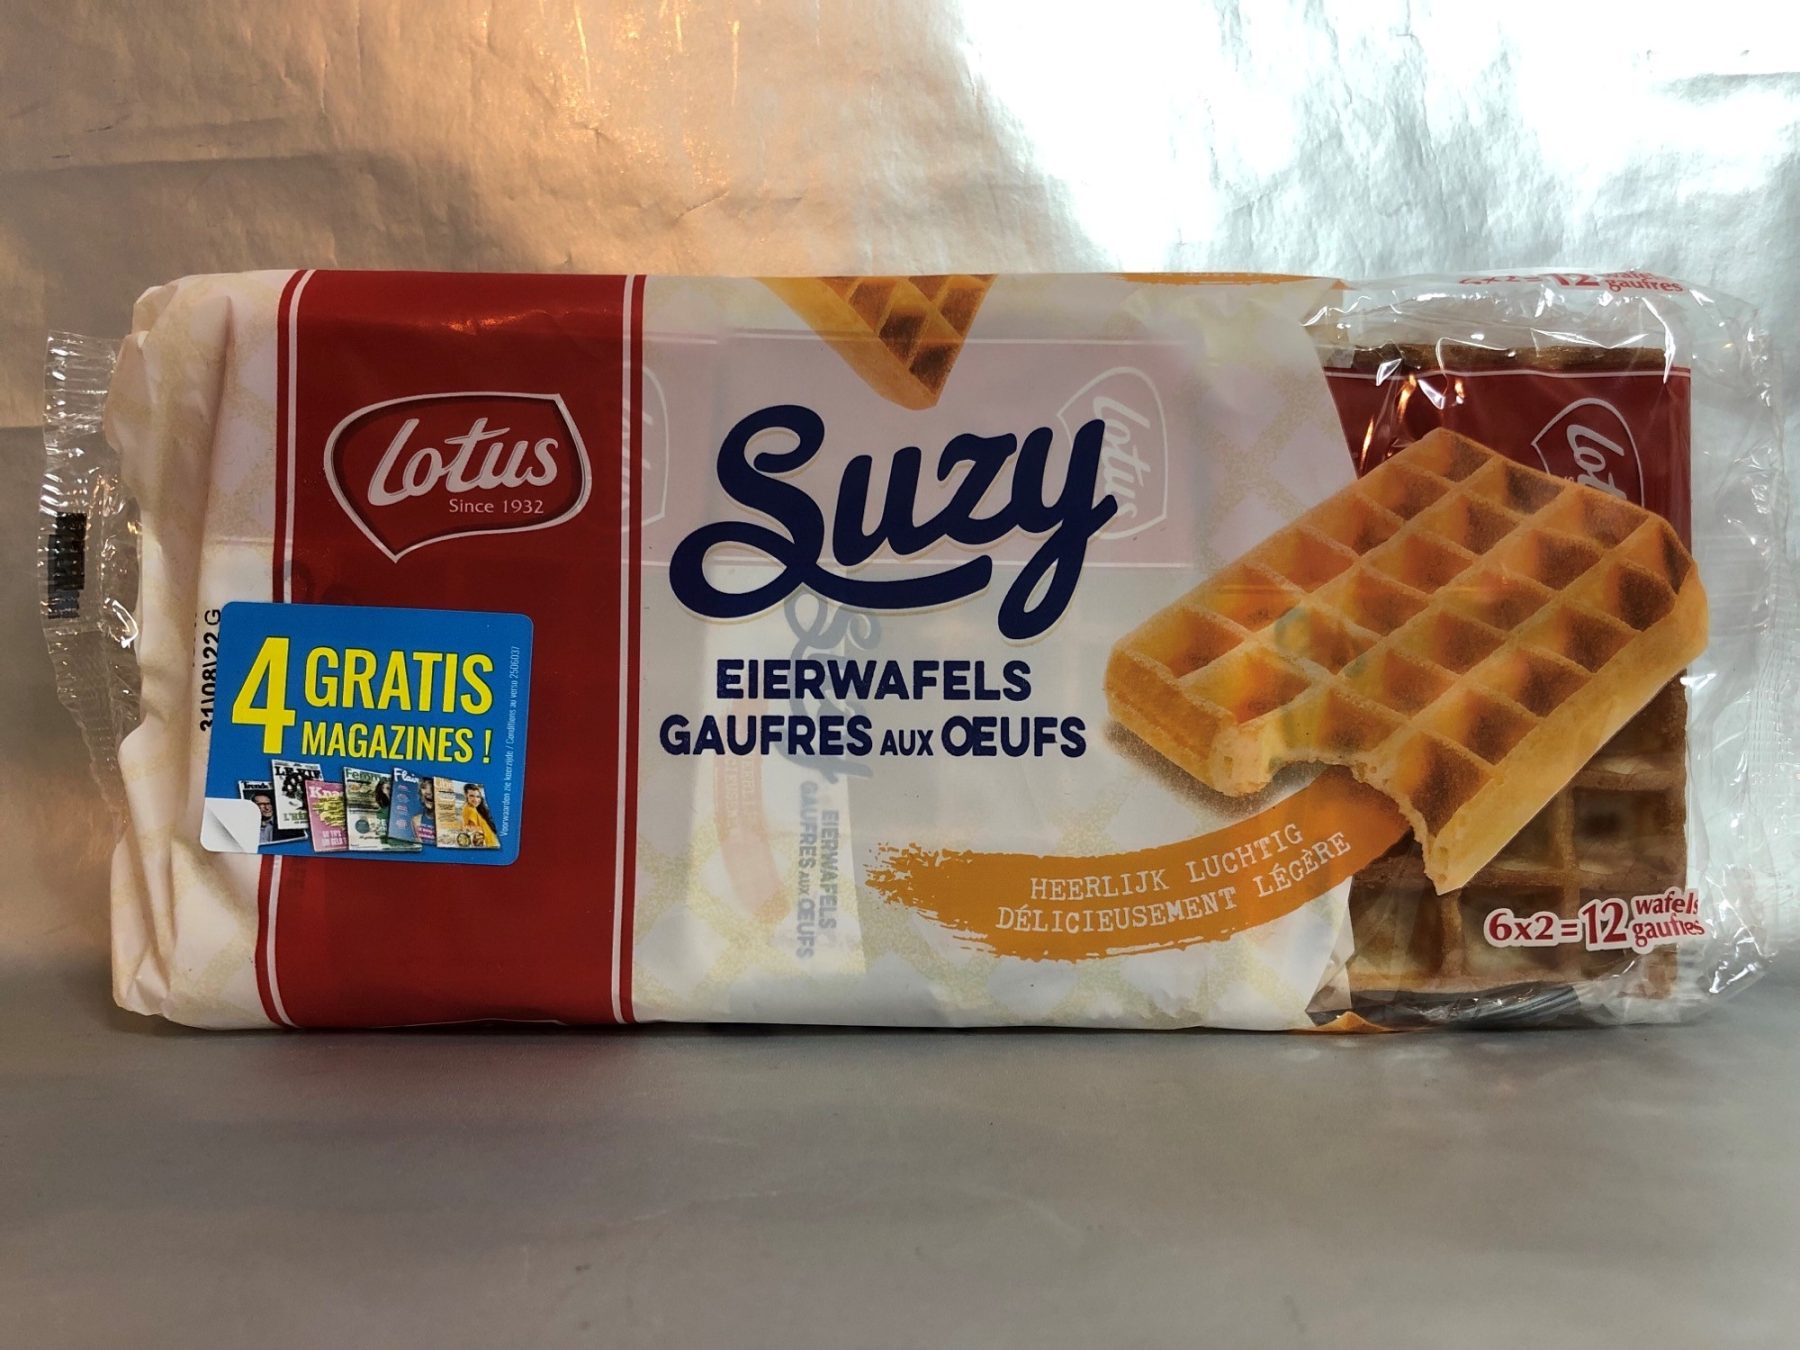 Lotus Suzy egg-waffles